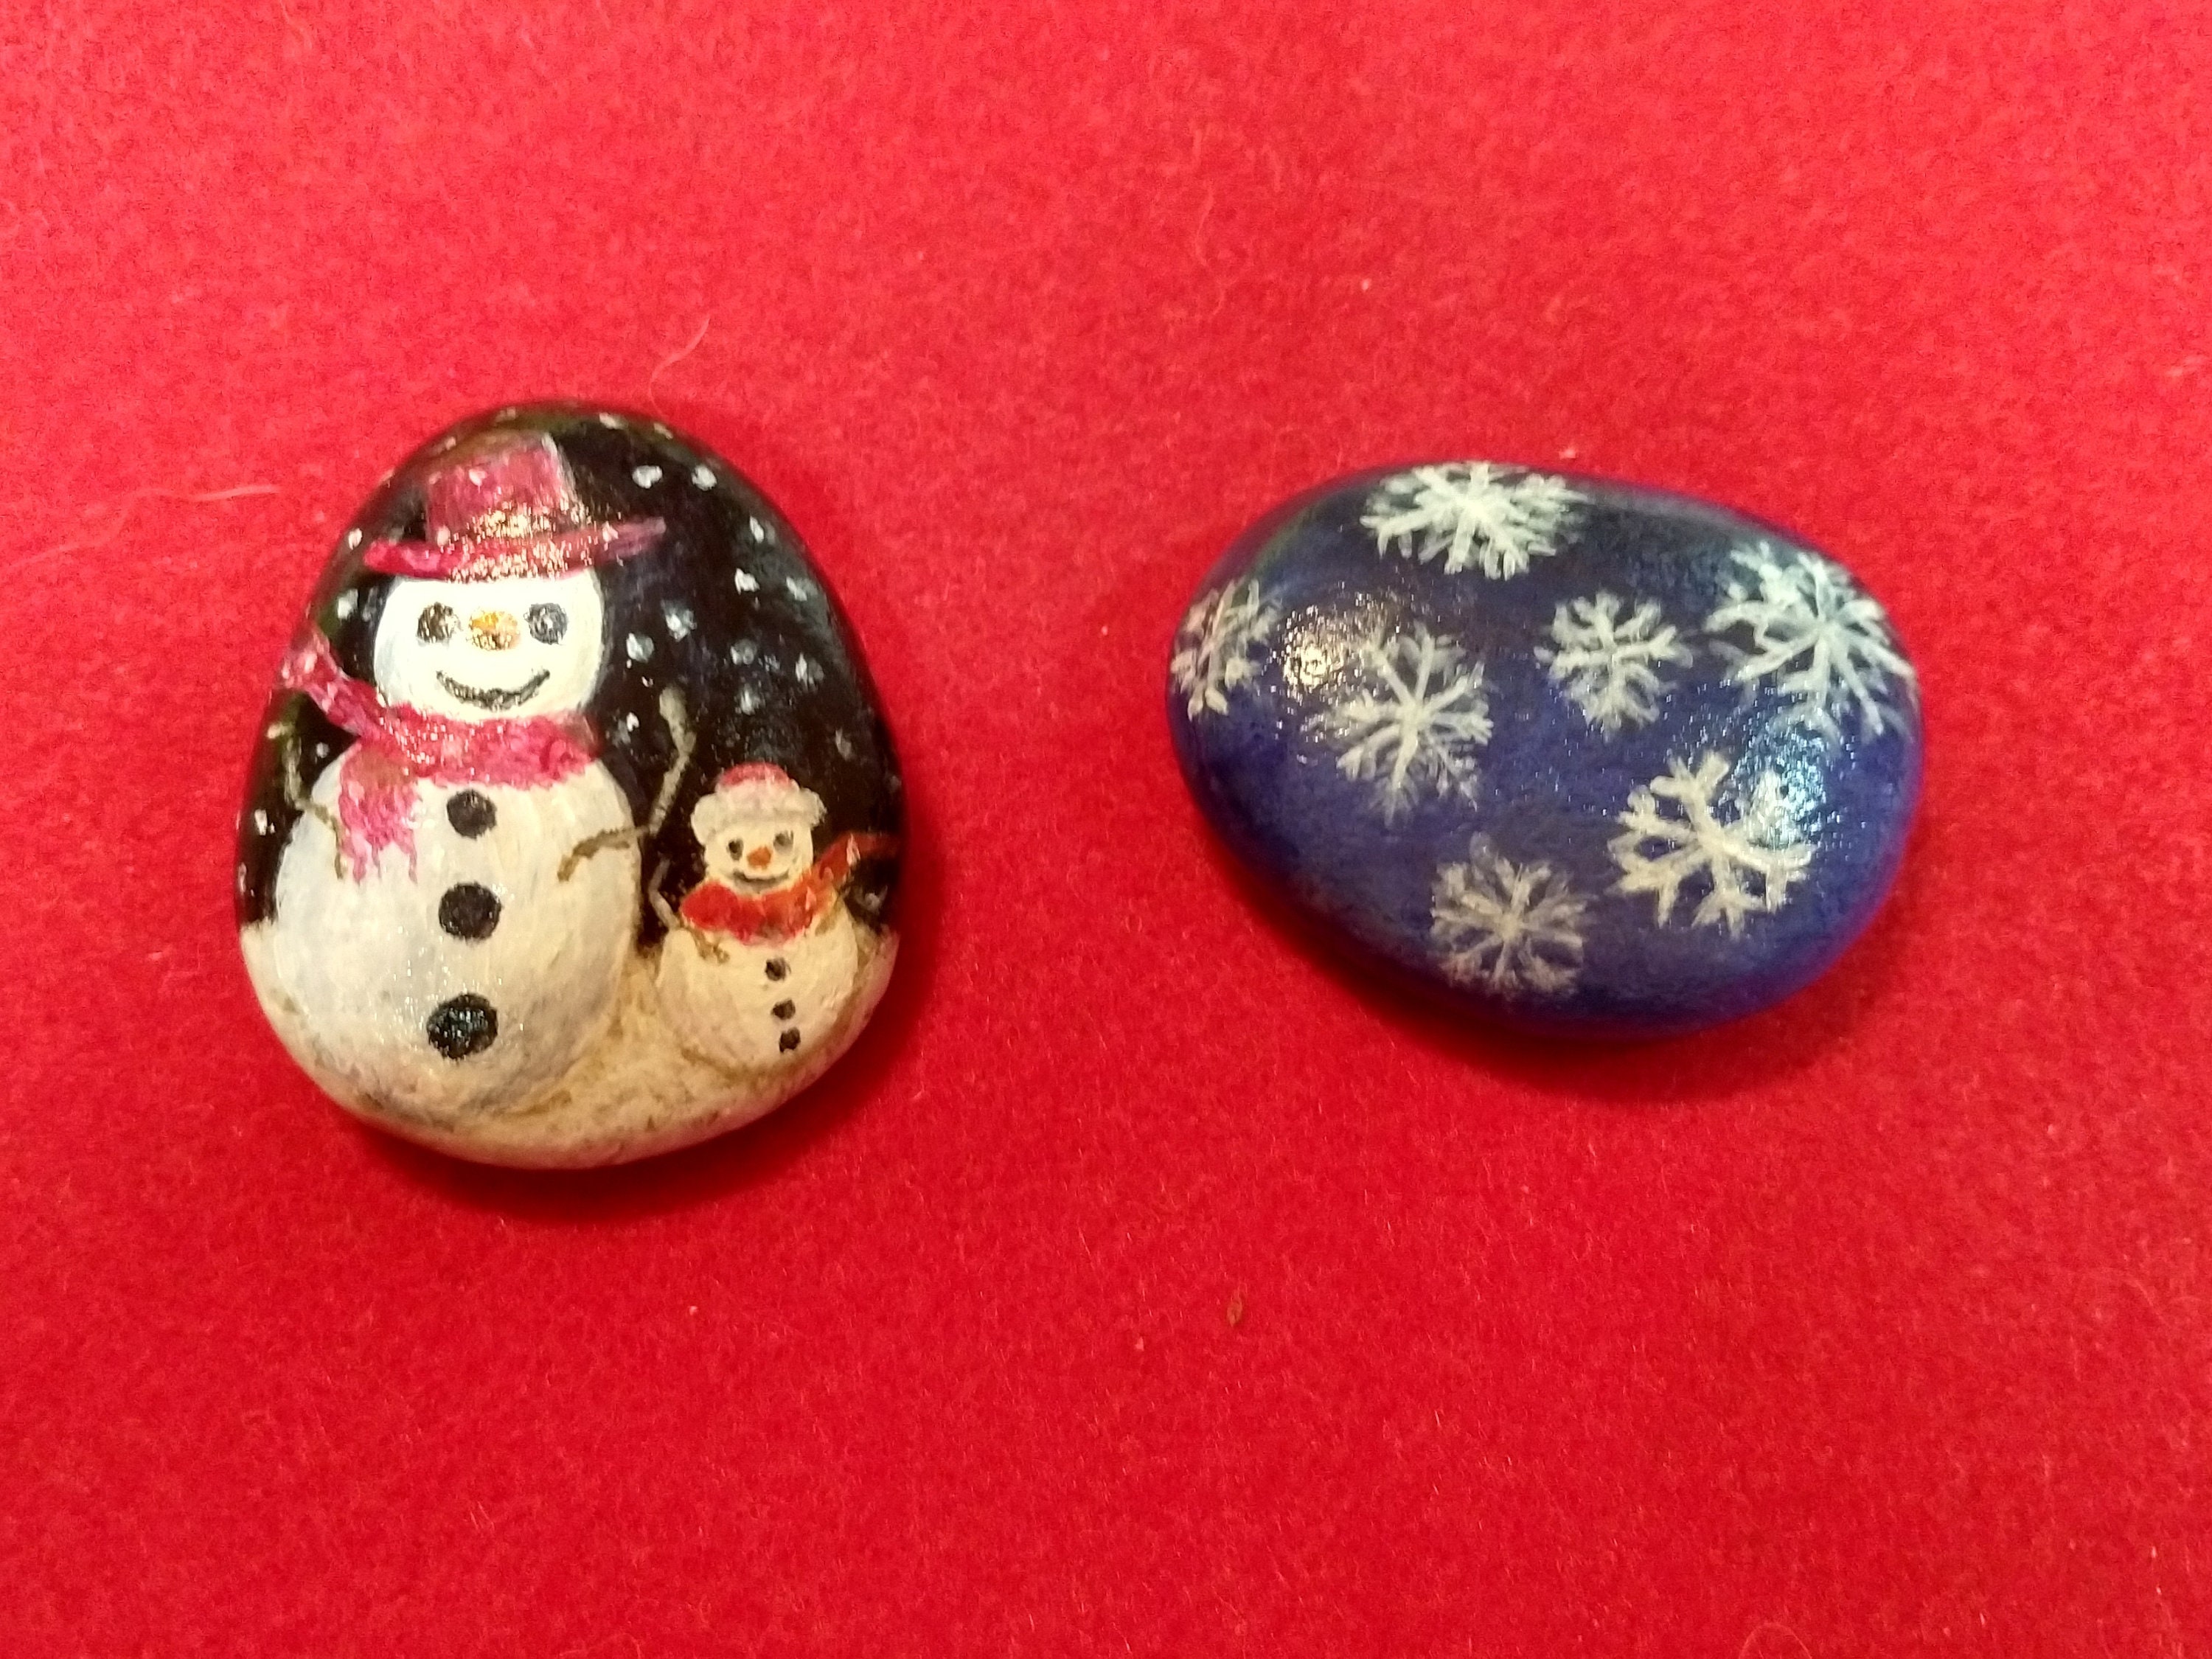 Custom Set of Hand Painted Christmas Rocks, Holiday Decor, Home